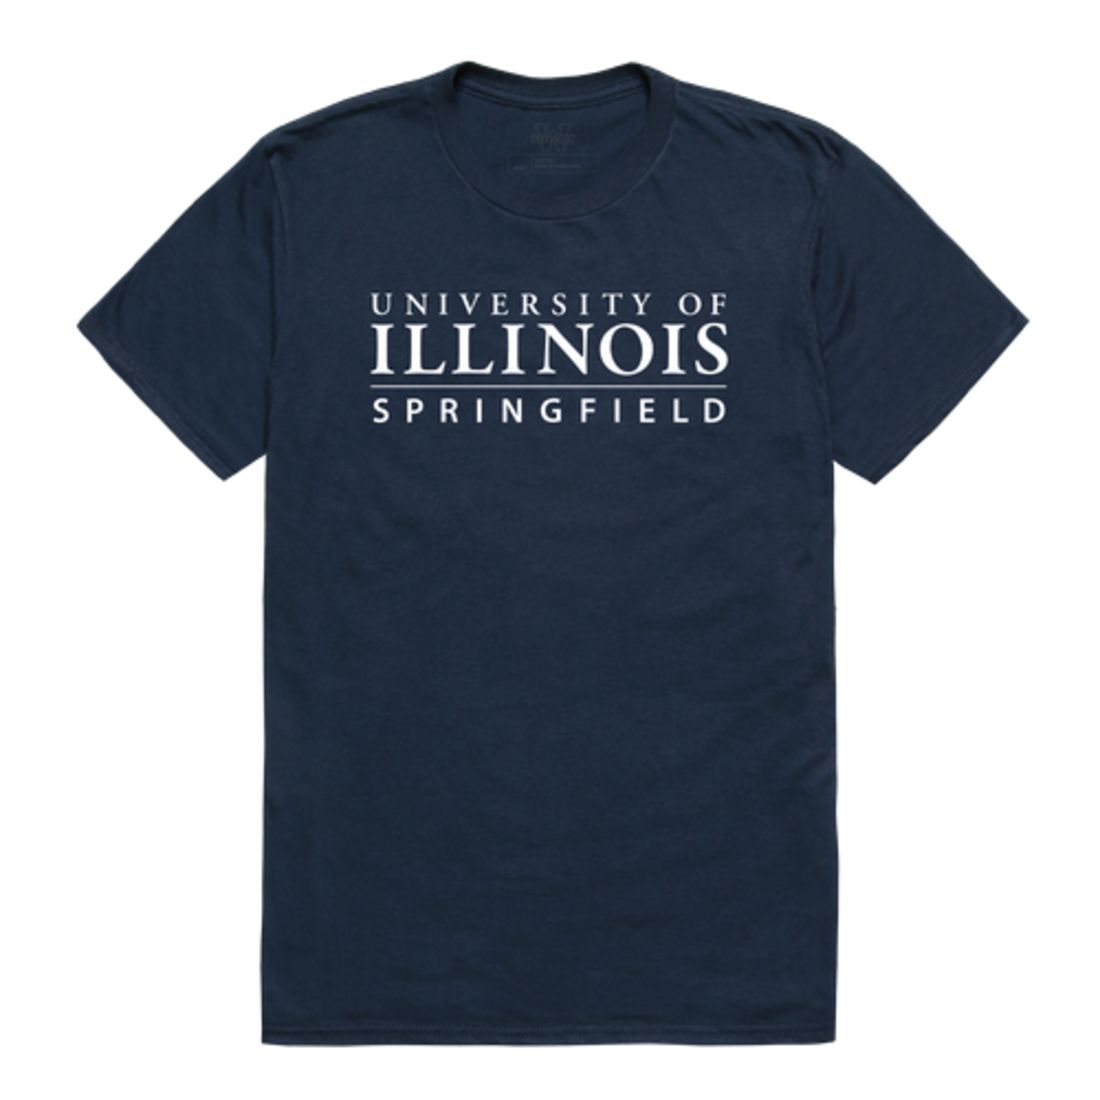 University of Illinois Springfield Prairie Stars Institutional T-Shirt Tee